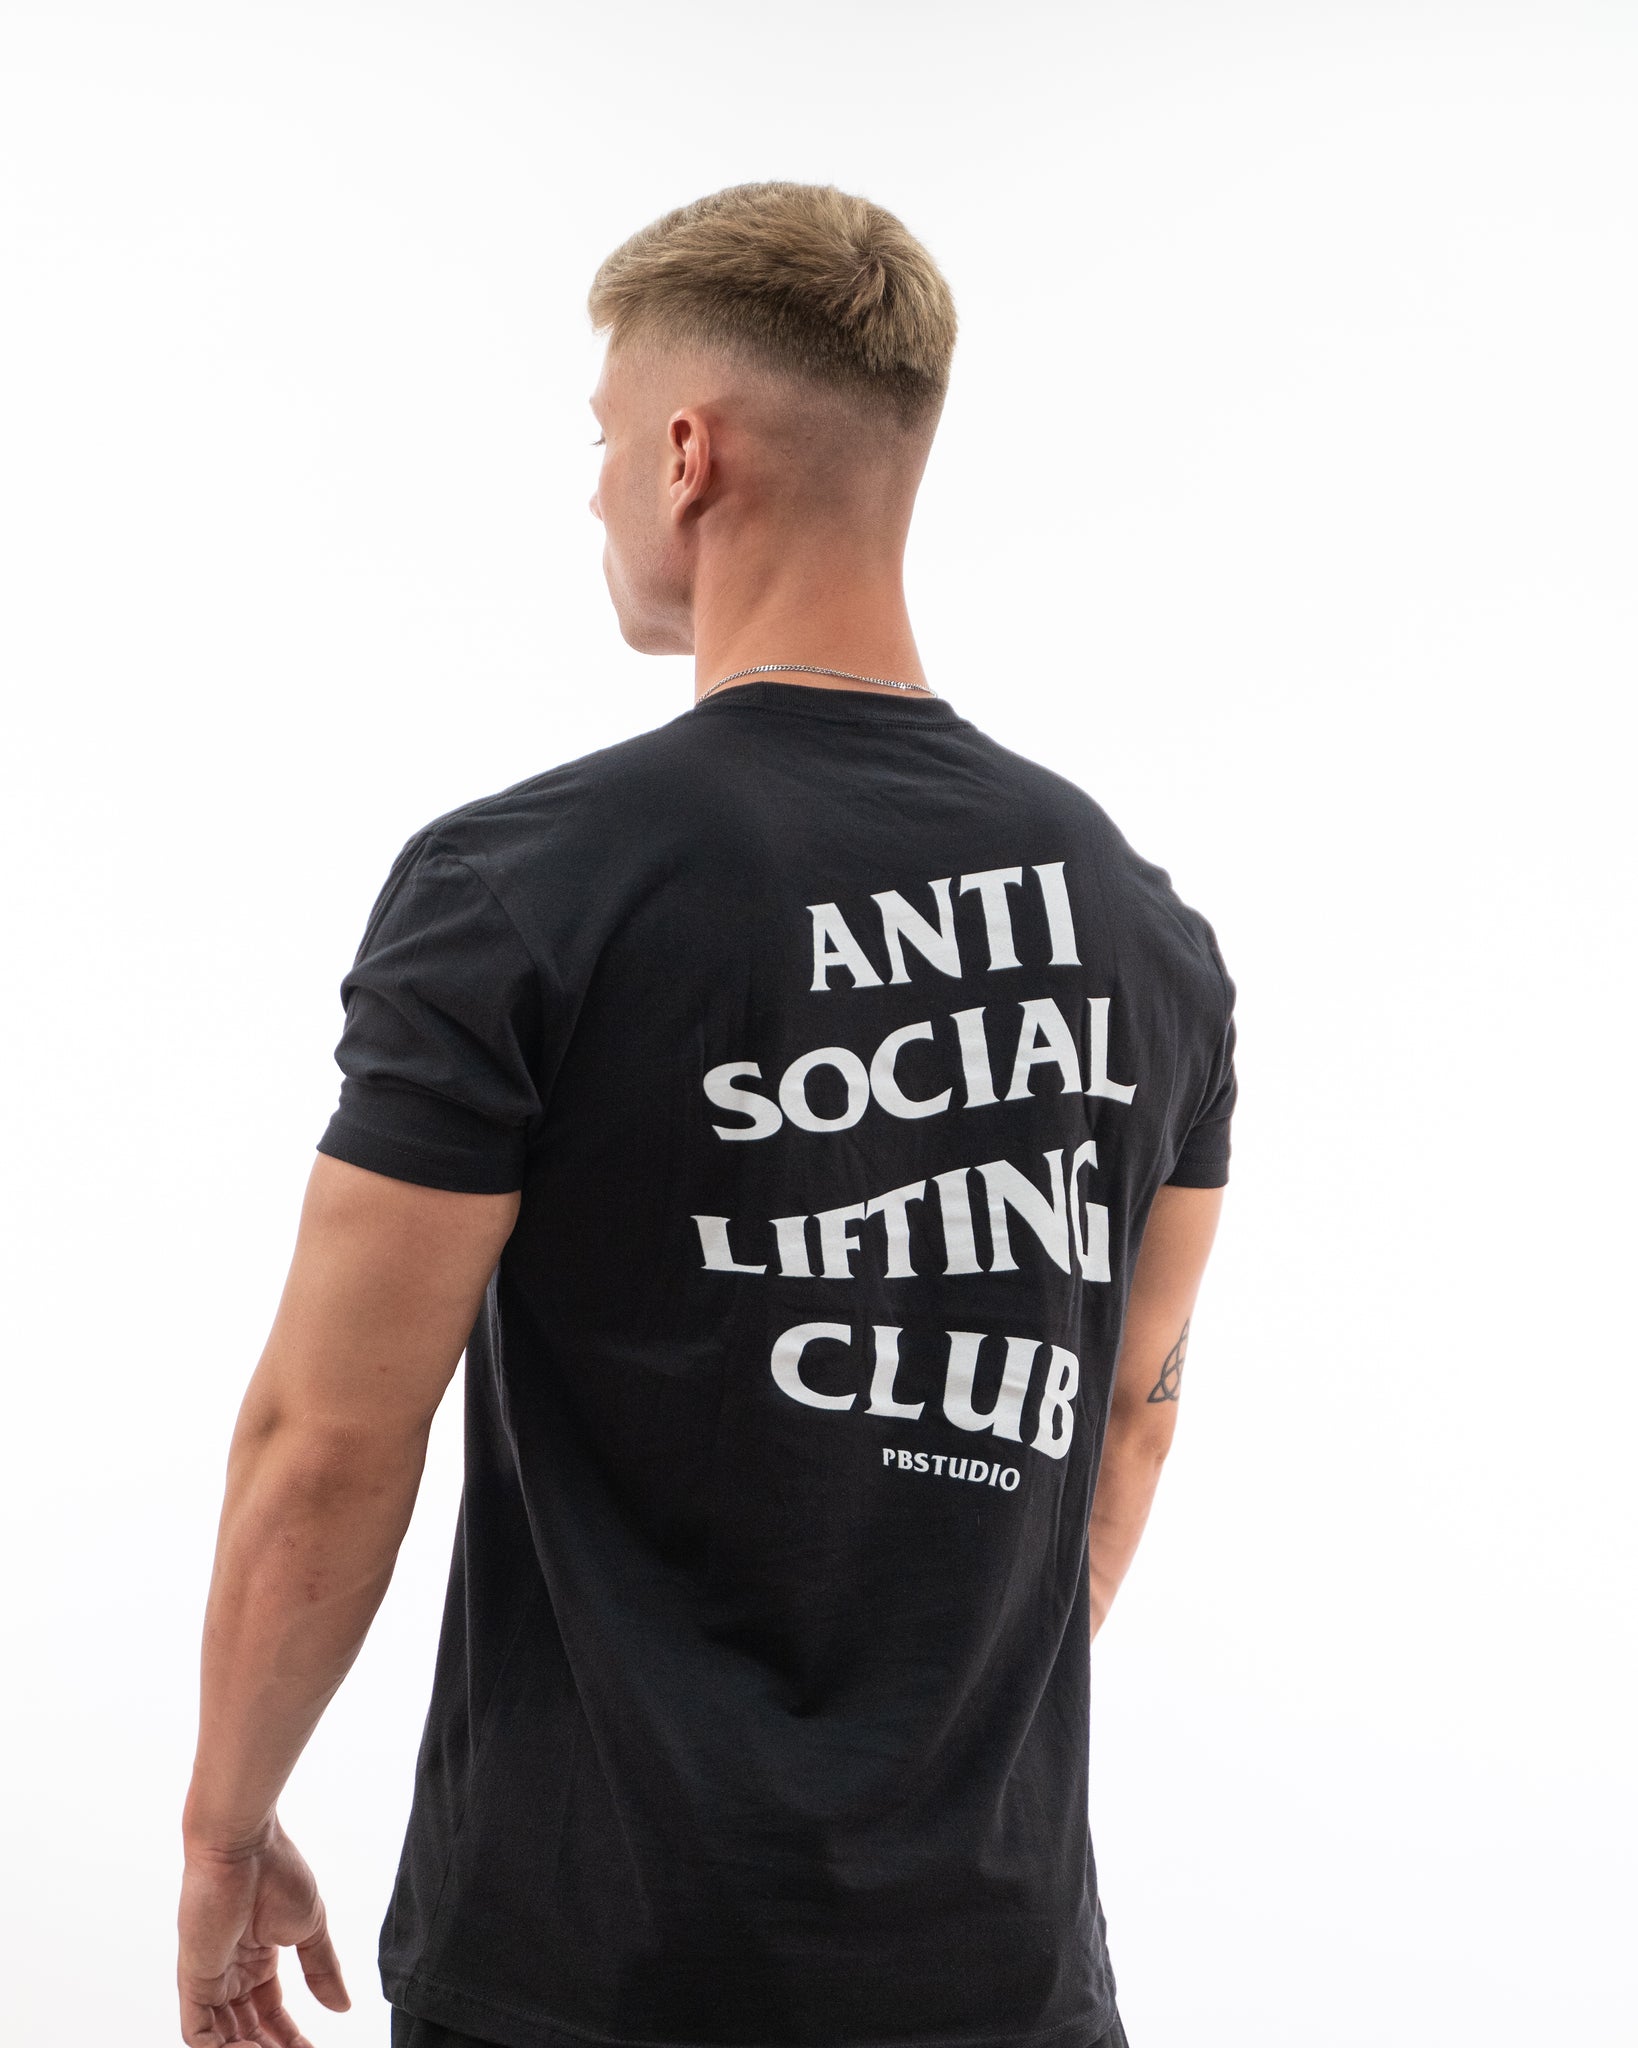 Anti Social Lifting Club T-shirt - Black